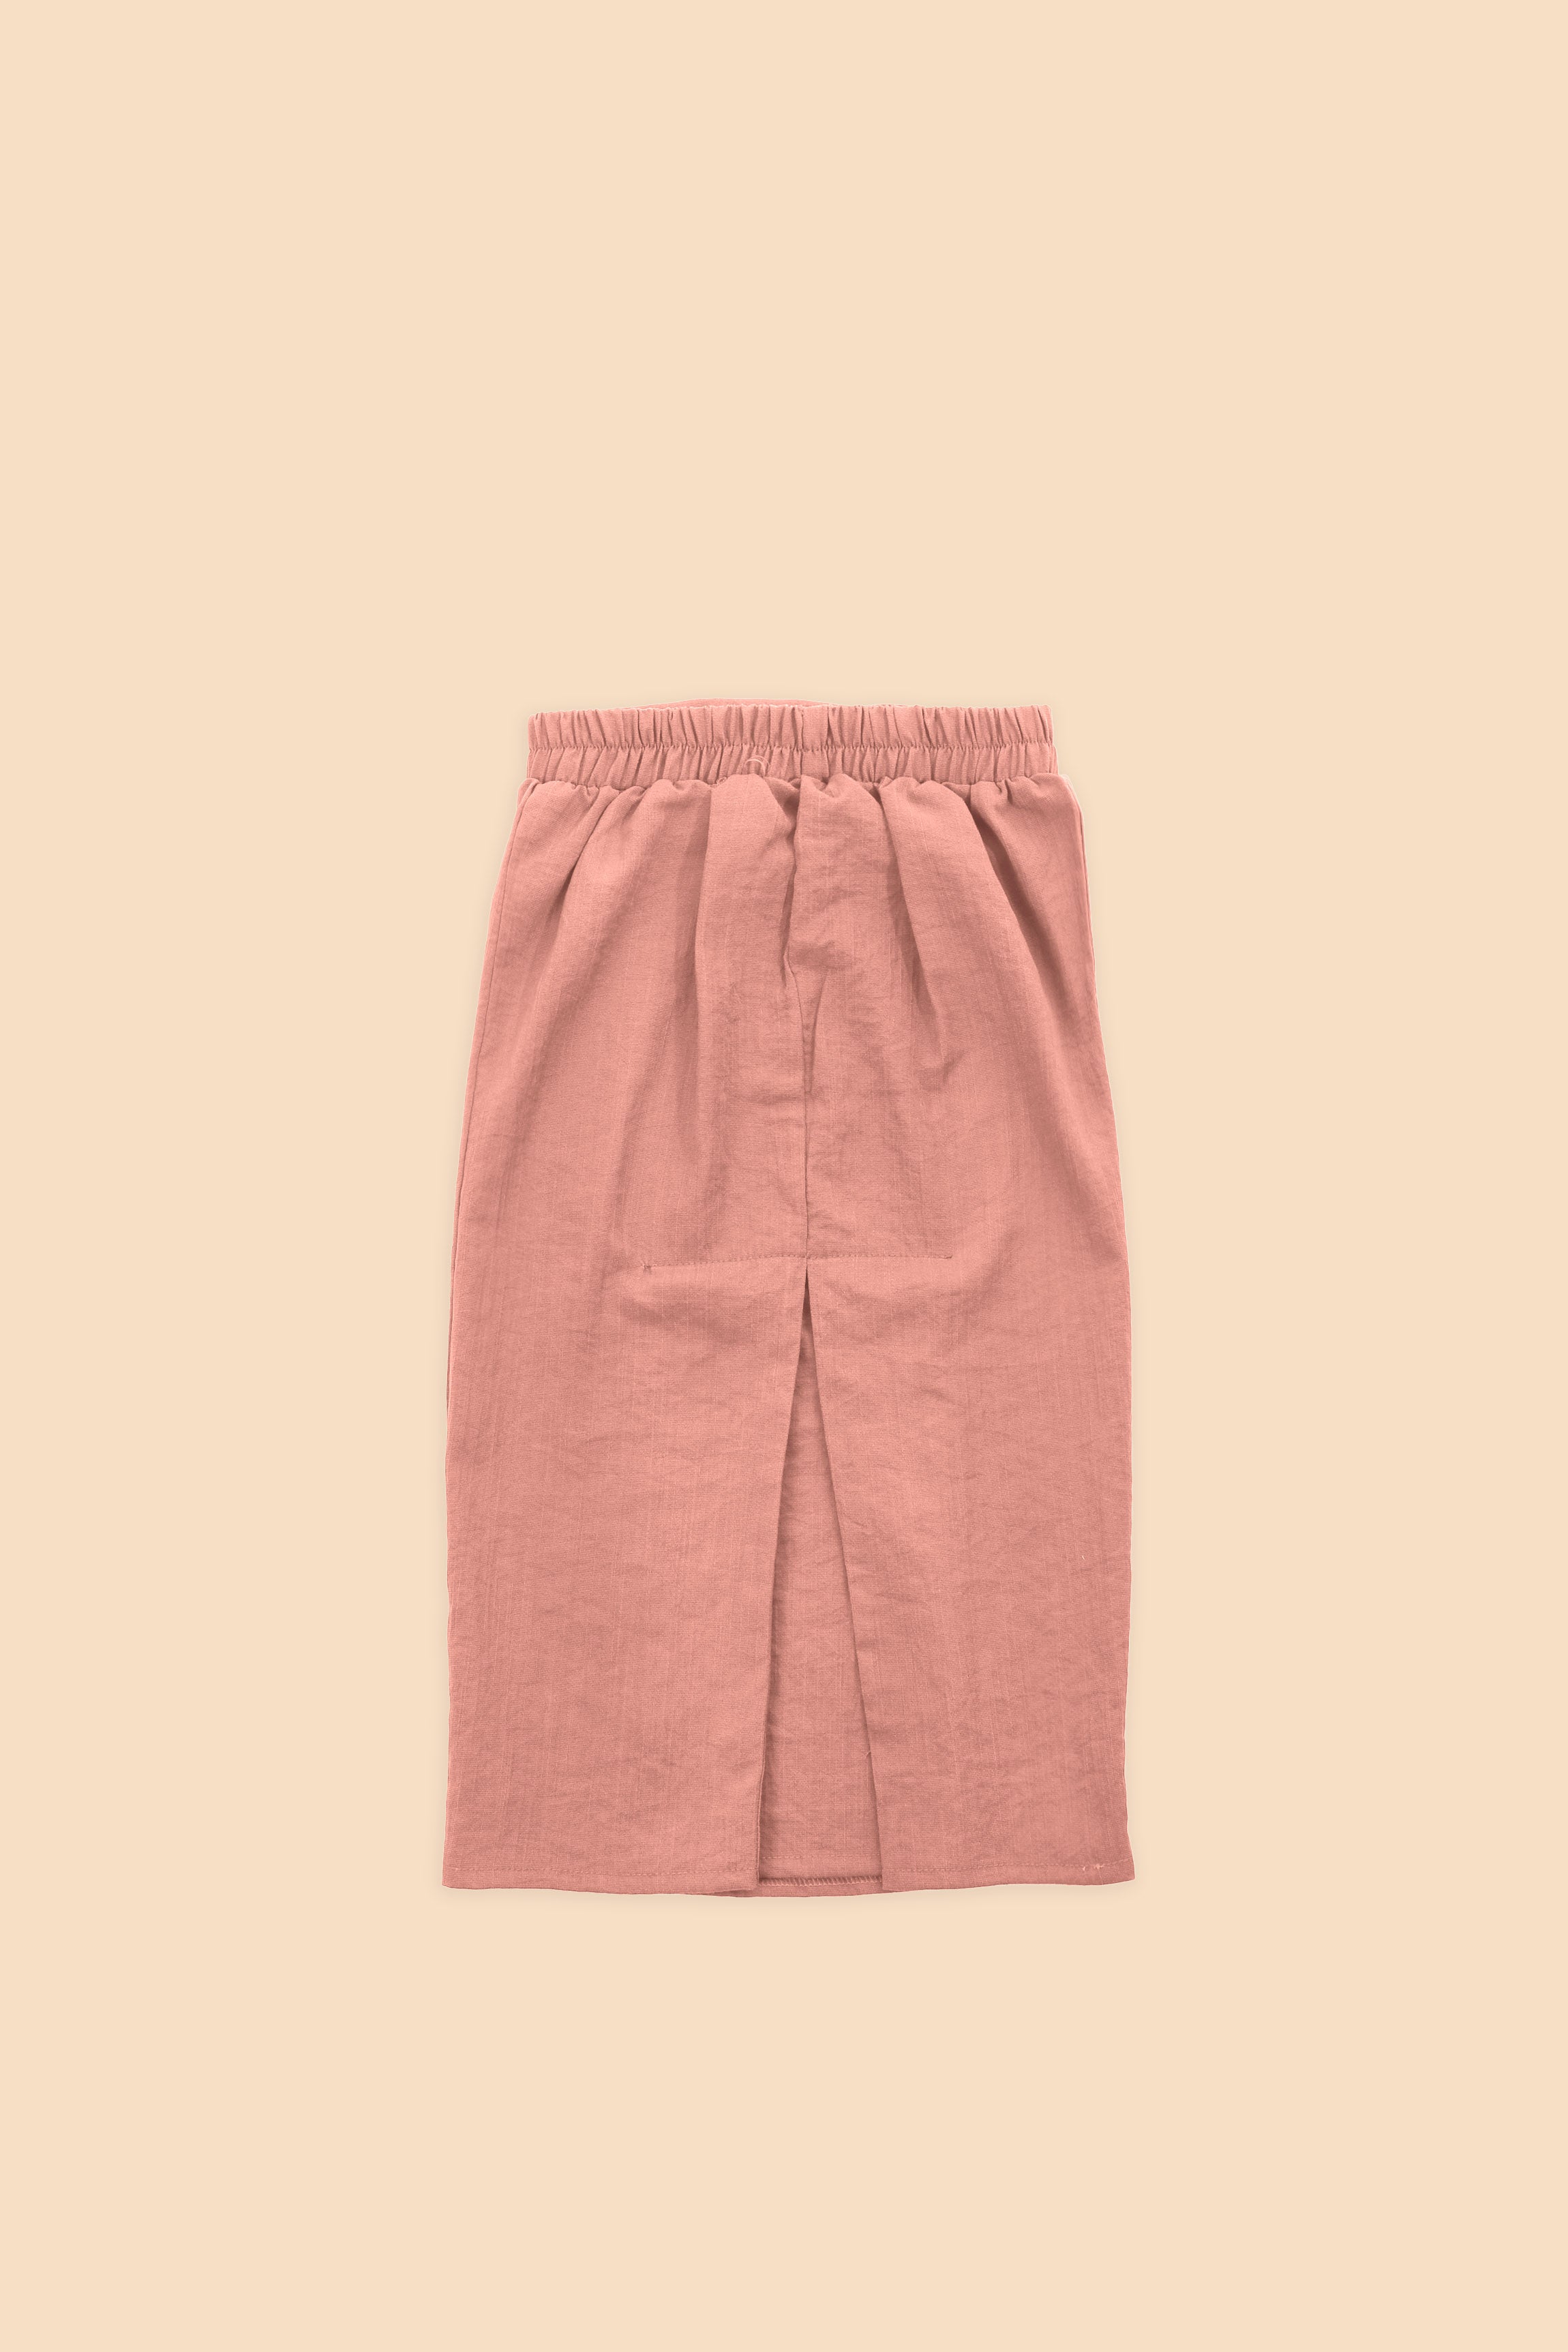 The Nostalgia Basic Skirt Watermelon Pink